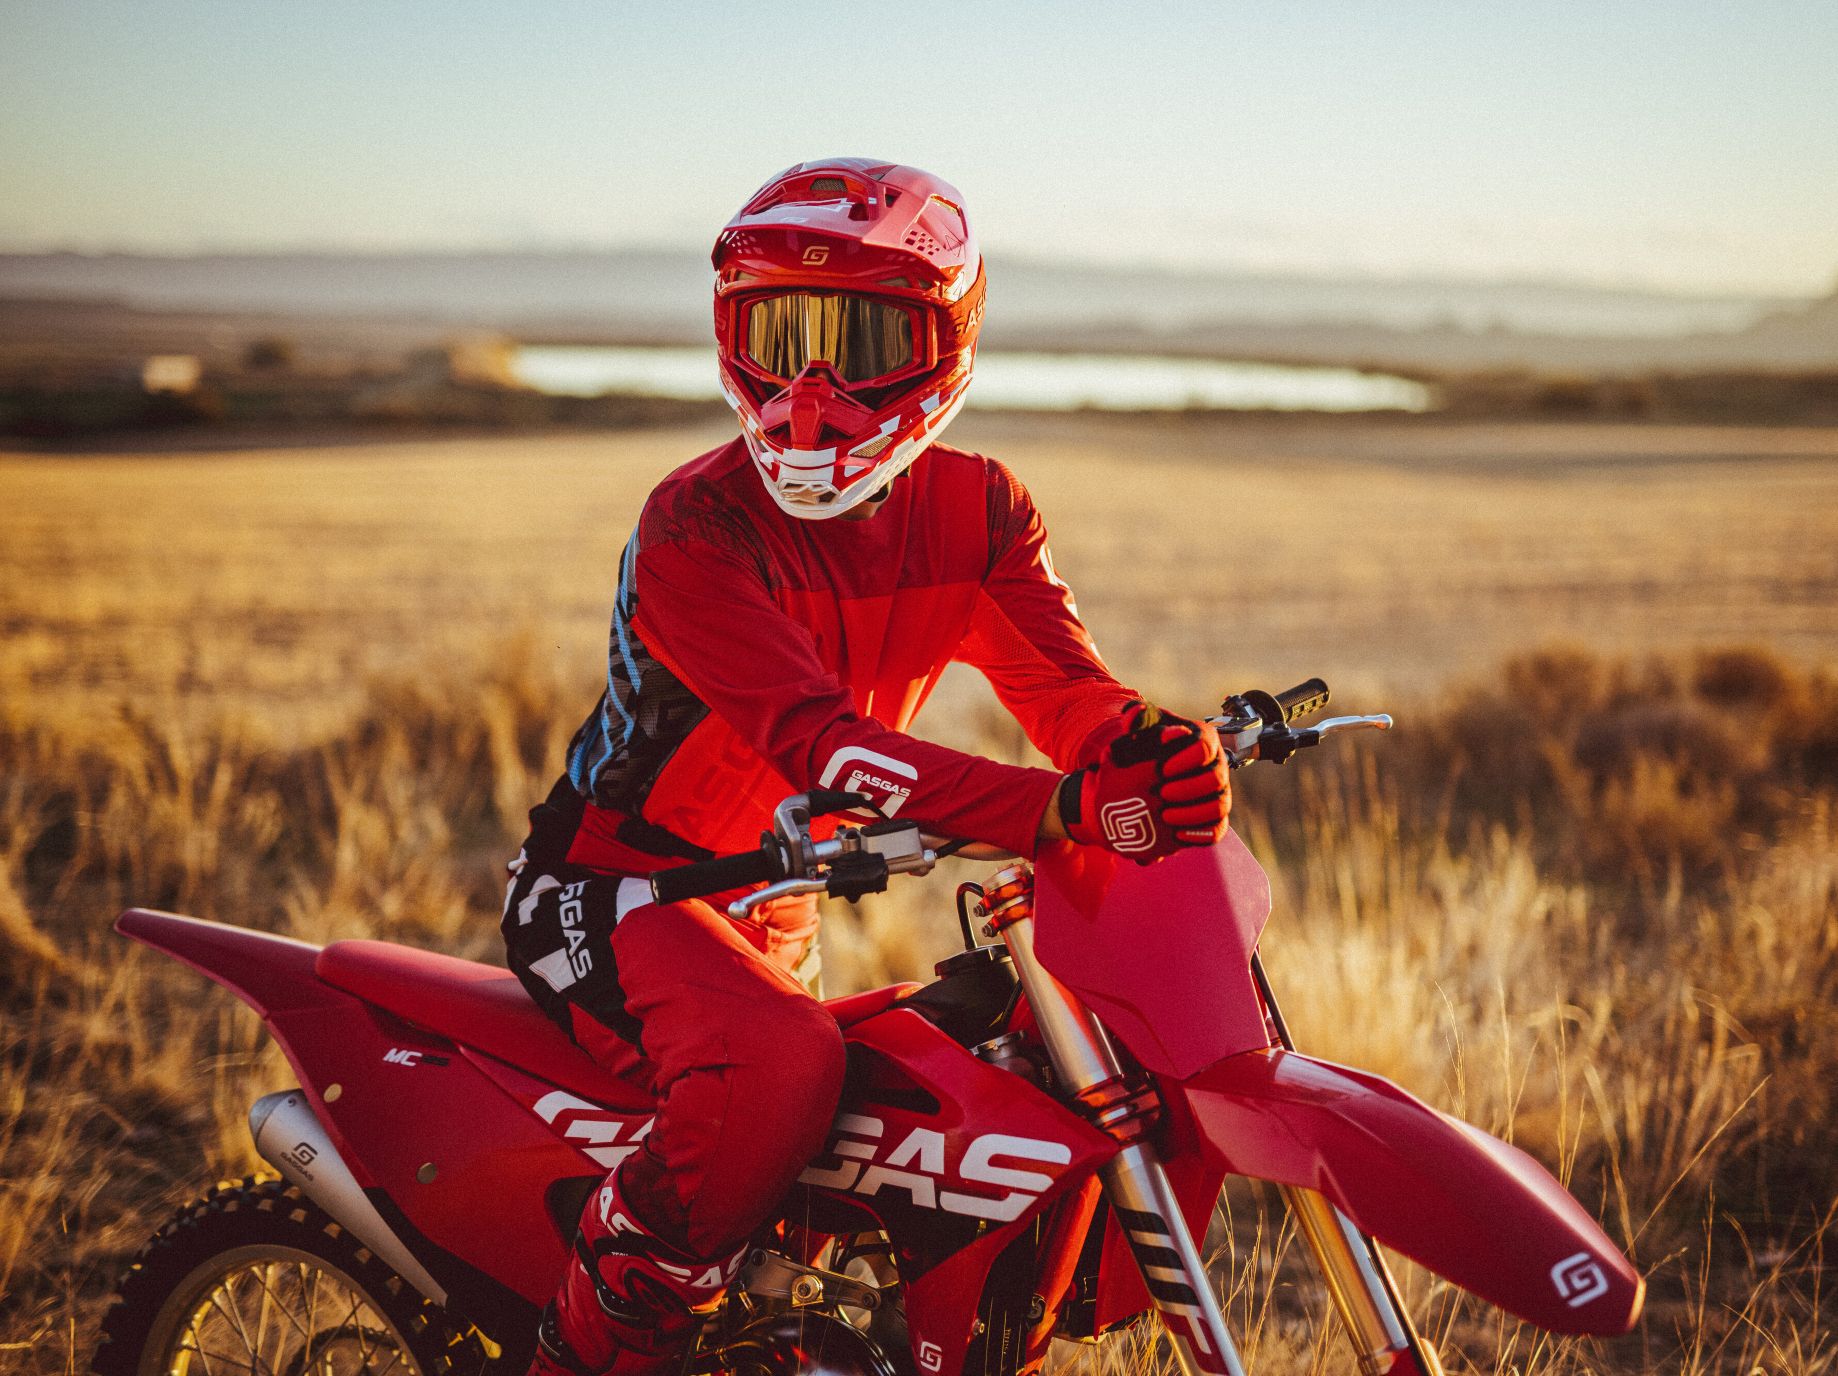 Espaldera Knox equipacion moto carretera enduro motocross quad trial